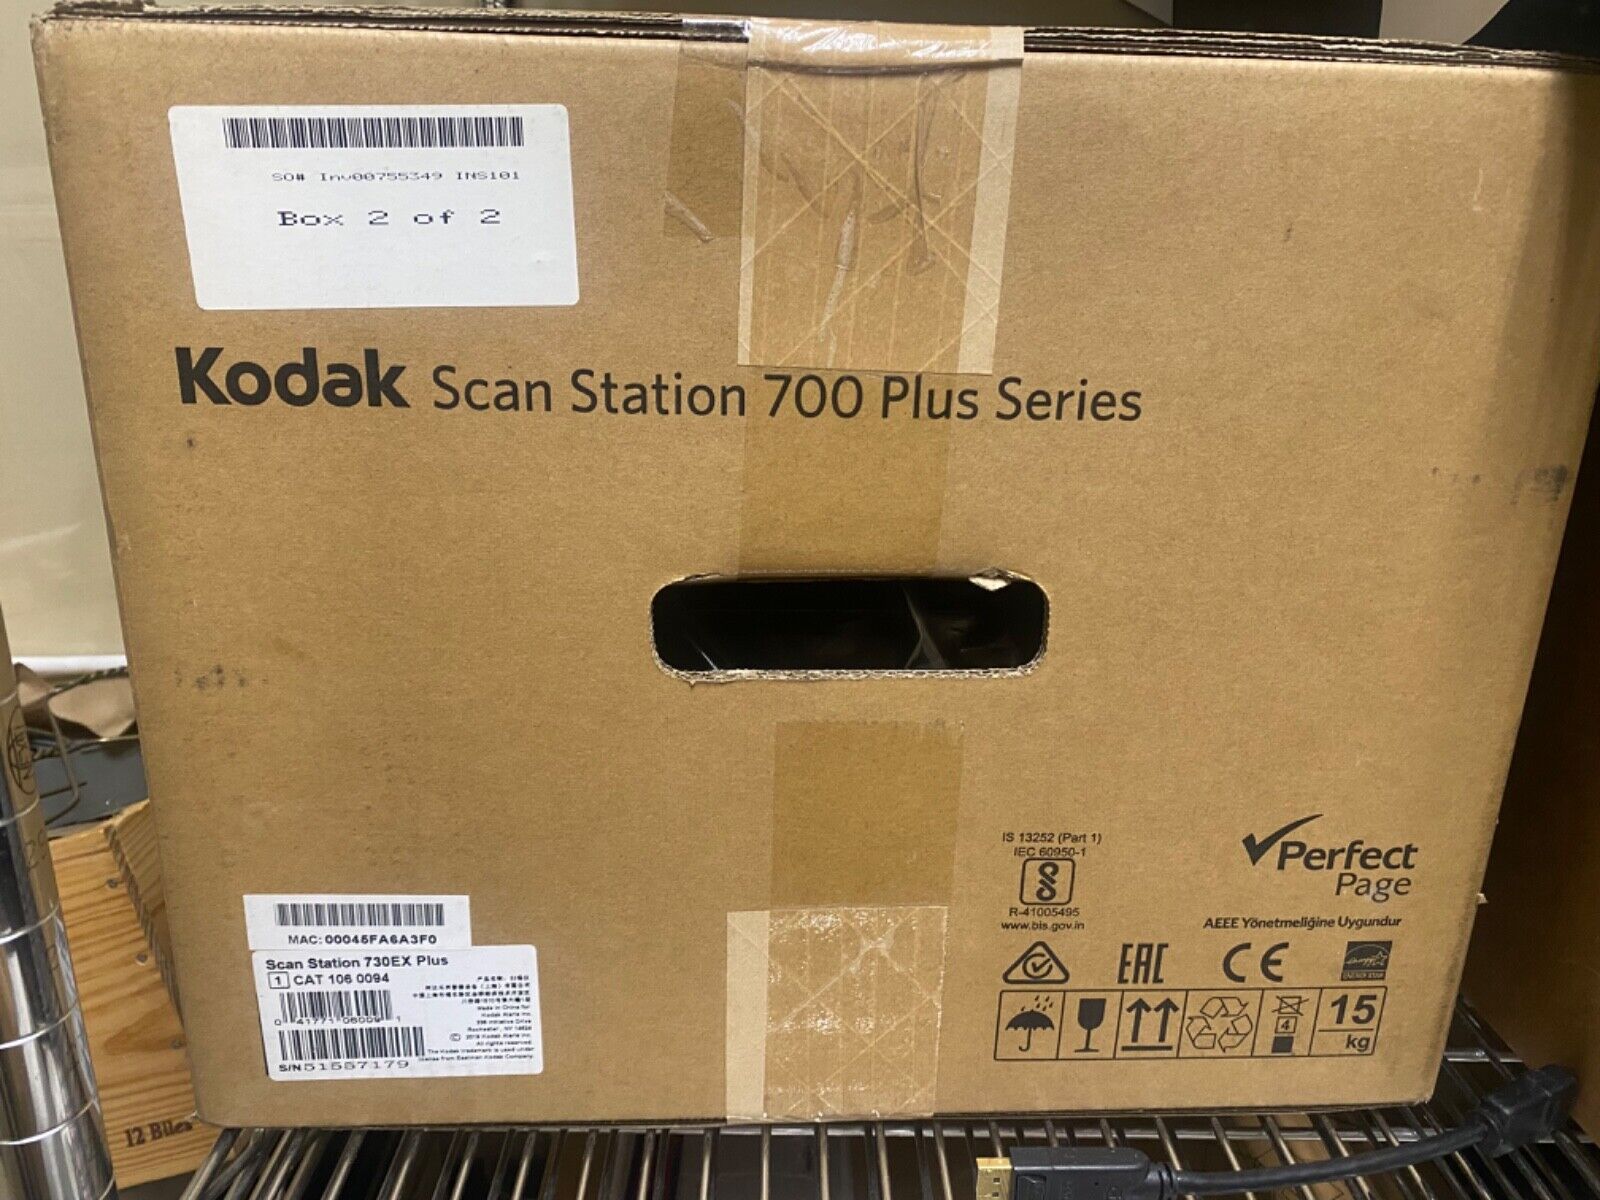 Kodak Scan Station 730 EX PLUS